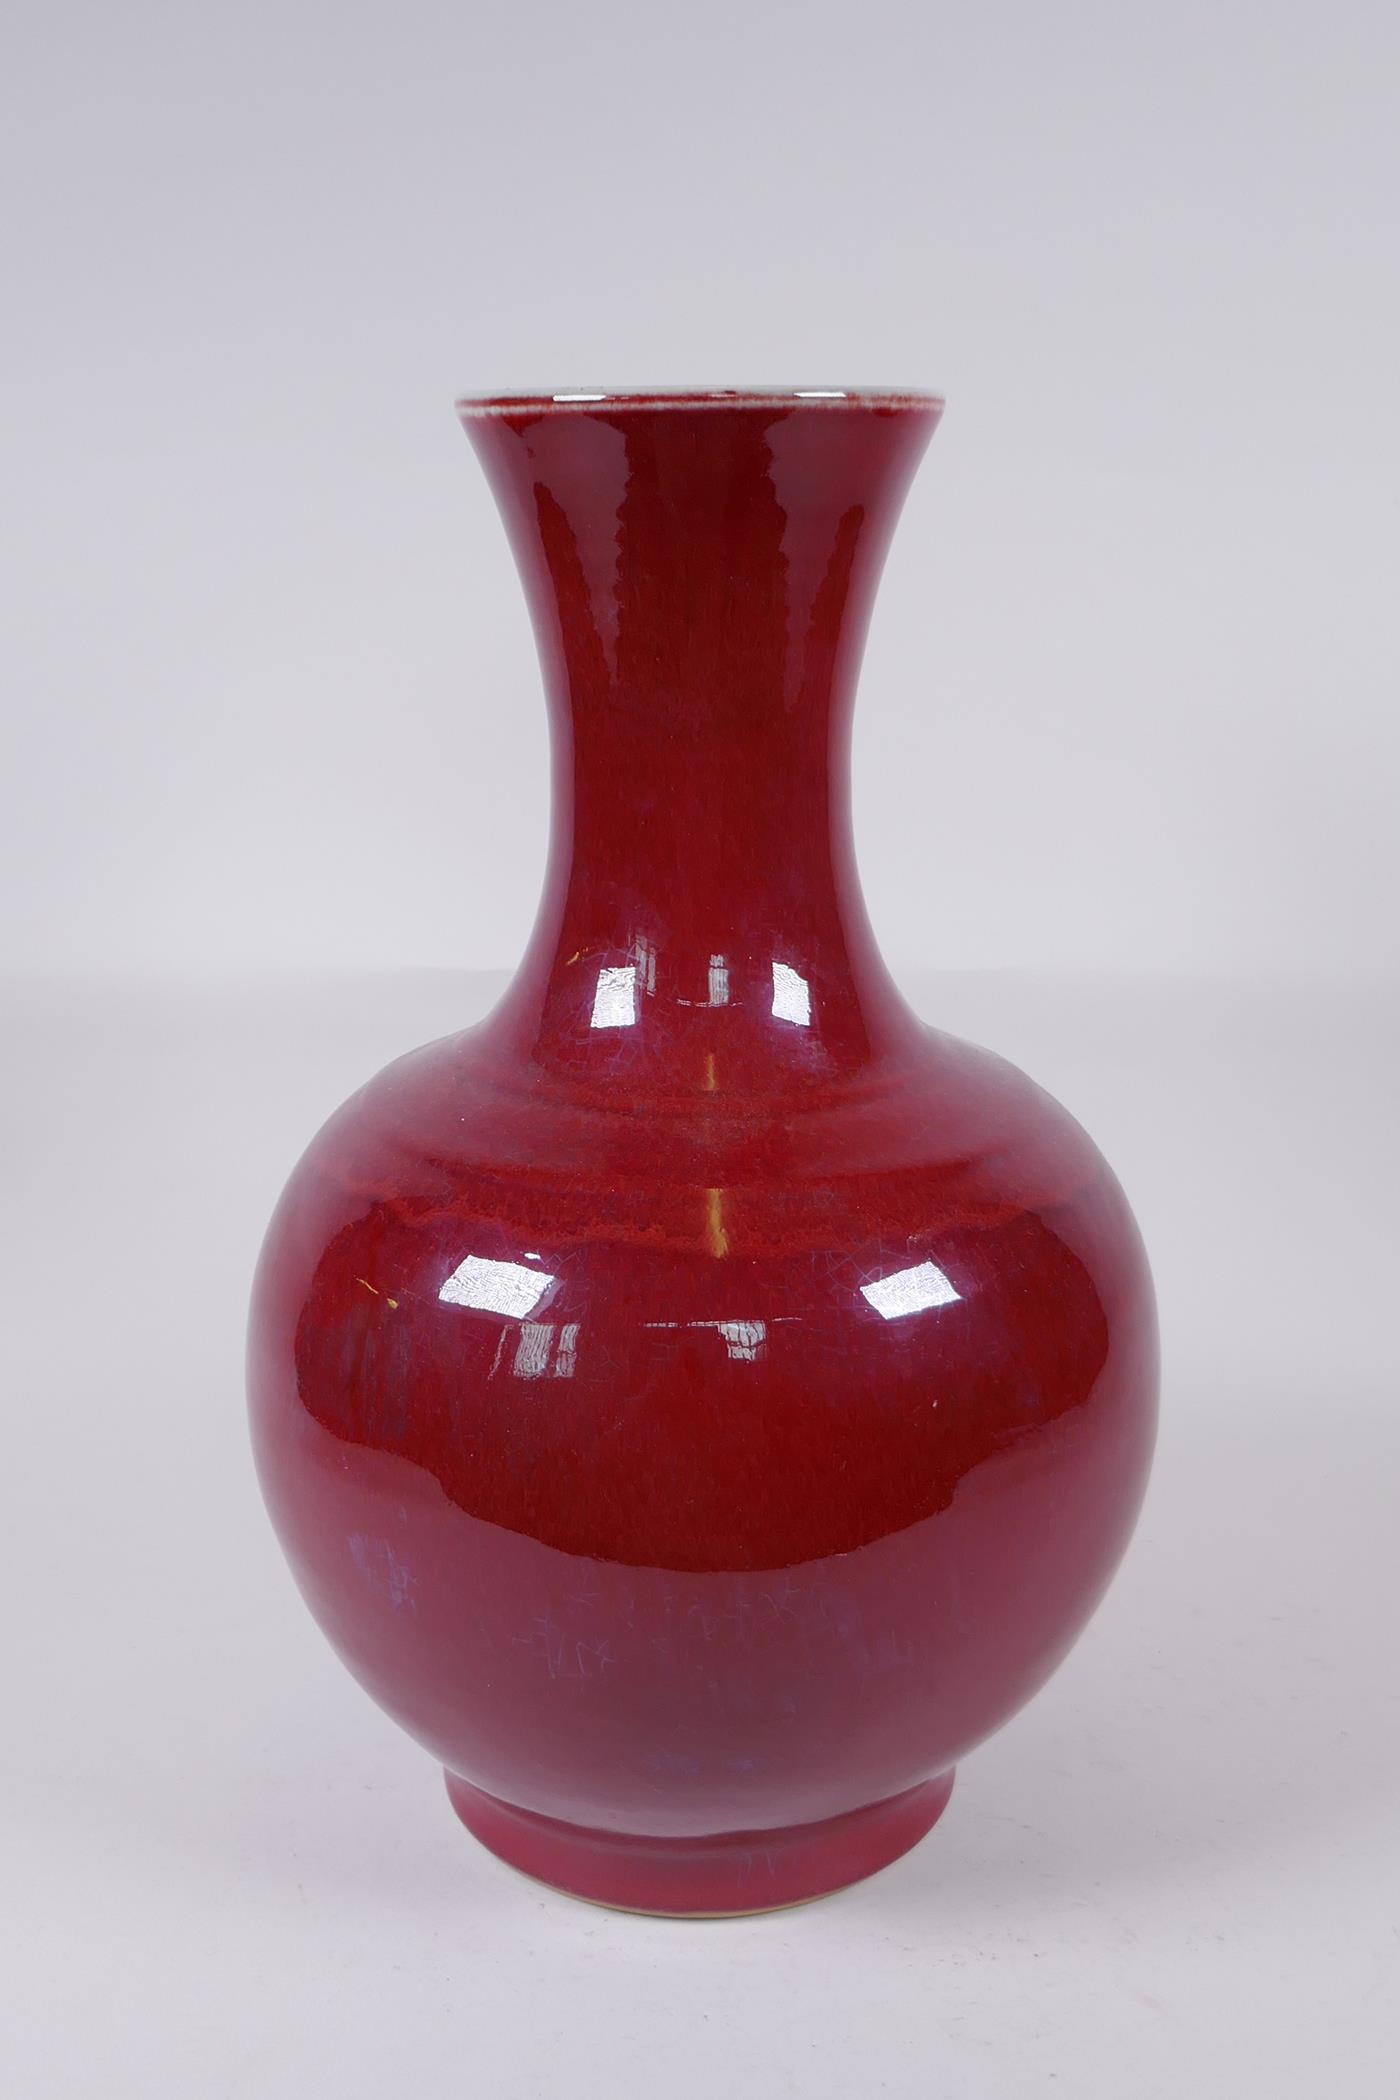 A sang de beouf glazed porcelain vase, Chinese Yongzheng 6 character mark to base, 34cm high